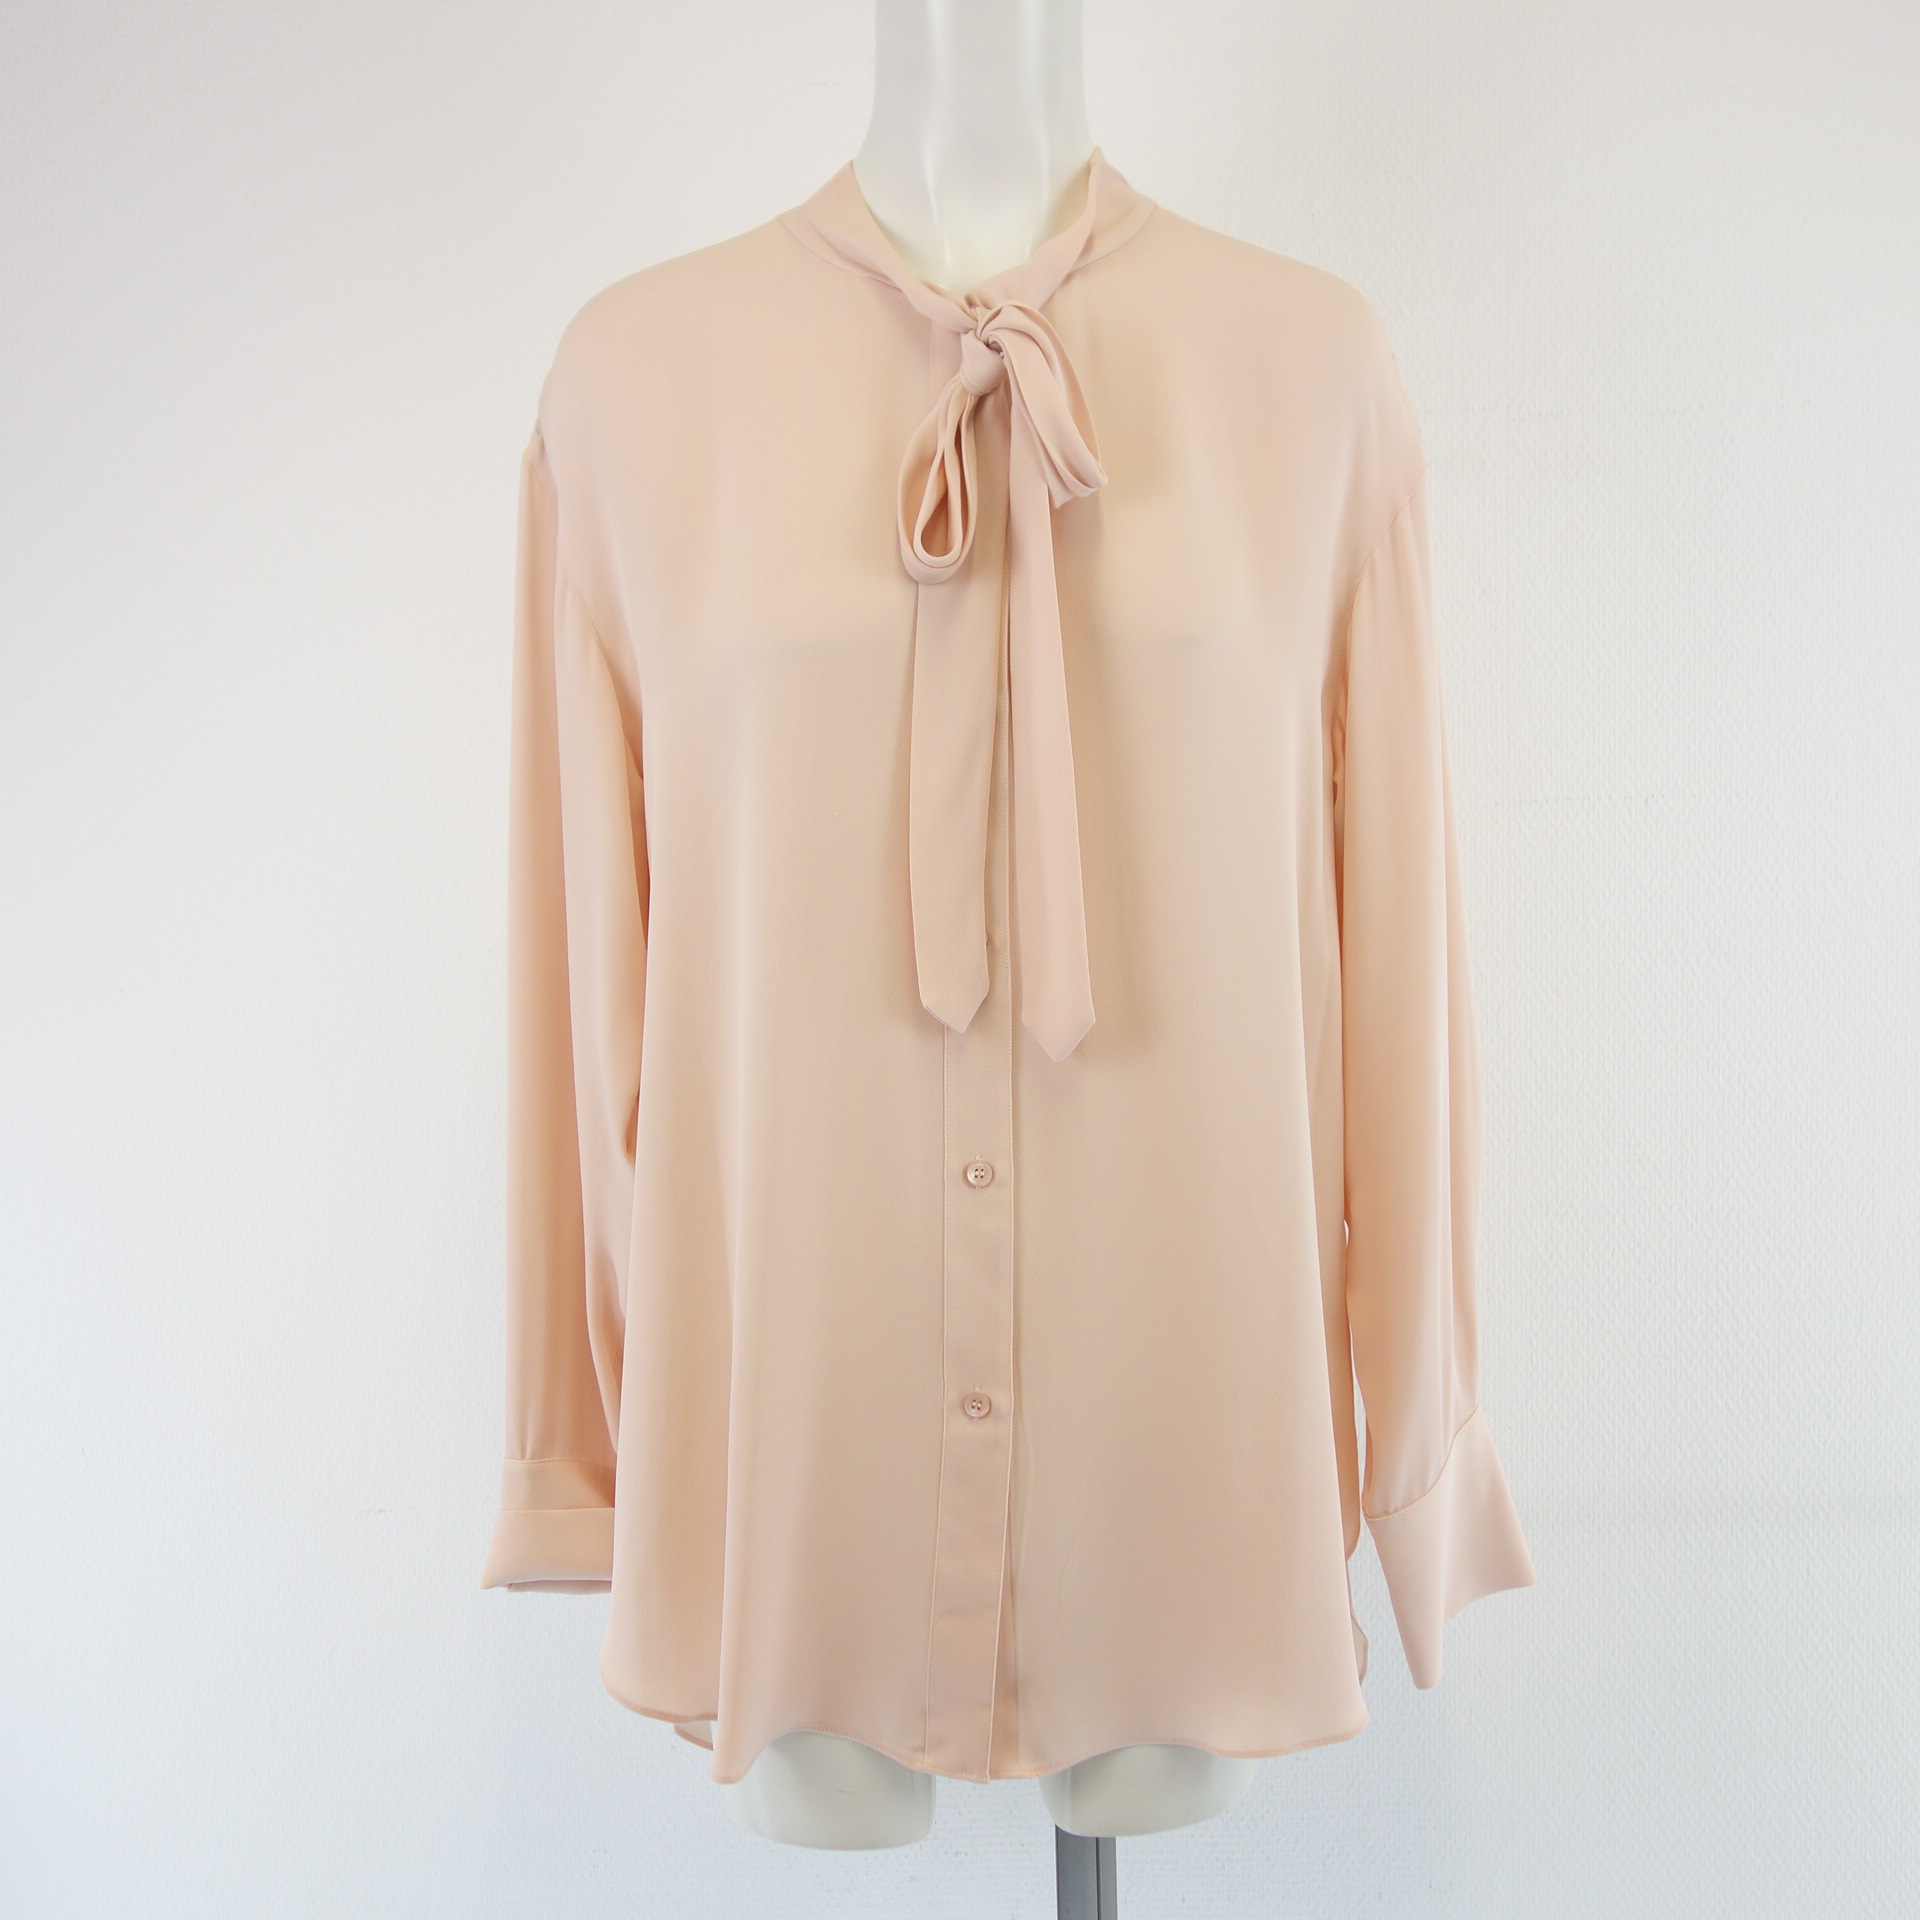 THEORY Damen Bluse Tunika Hemd Shirt Oversize Rose 100% Seide Schleife